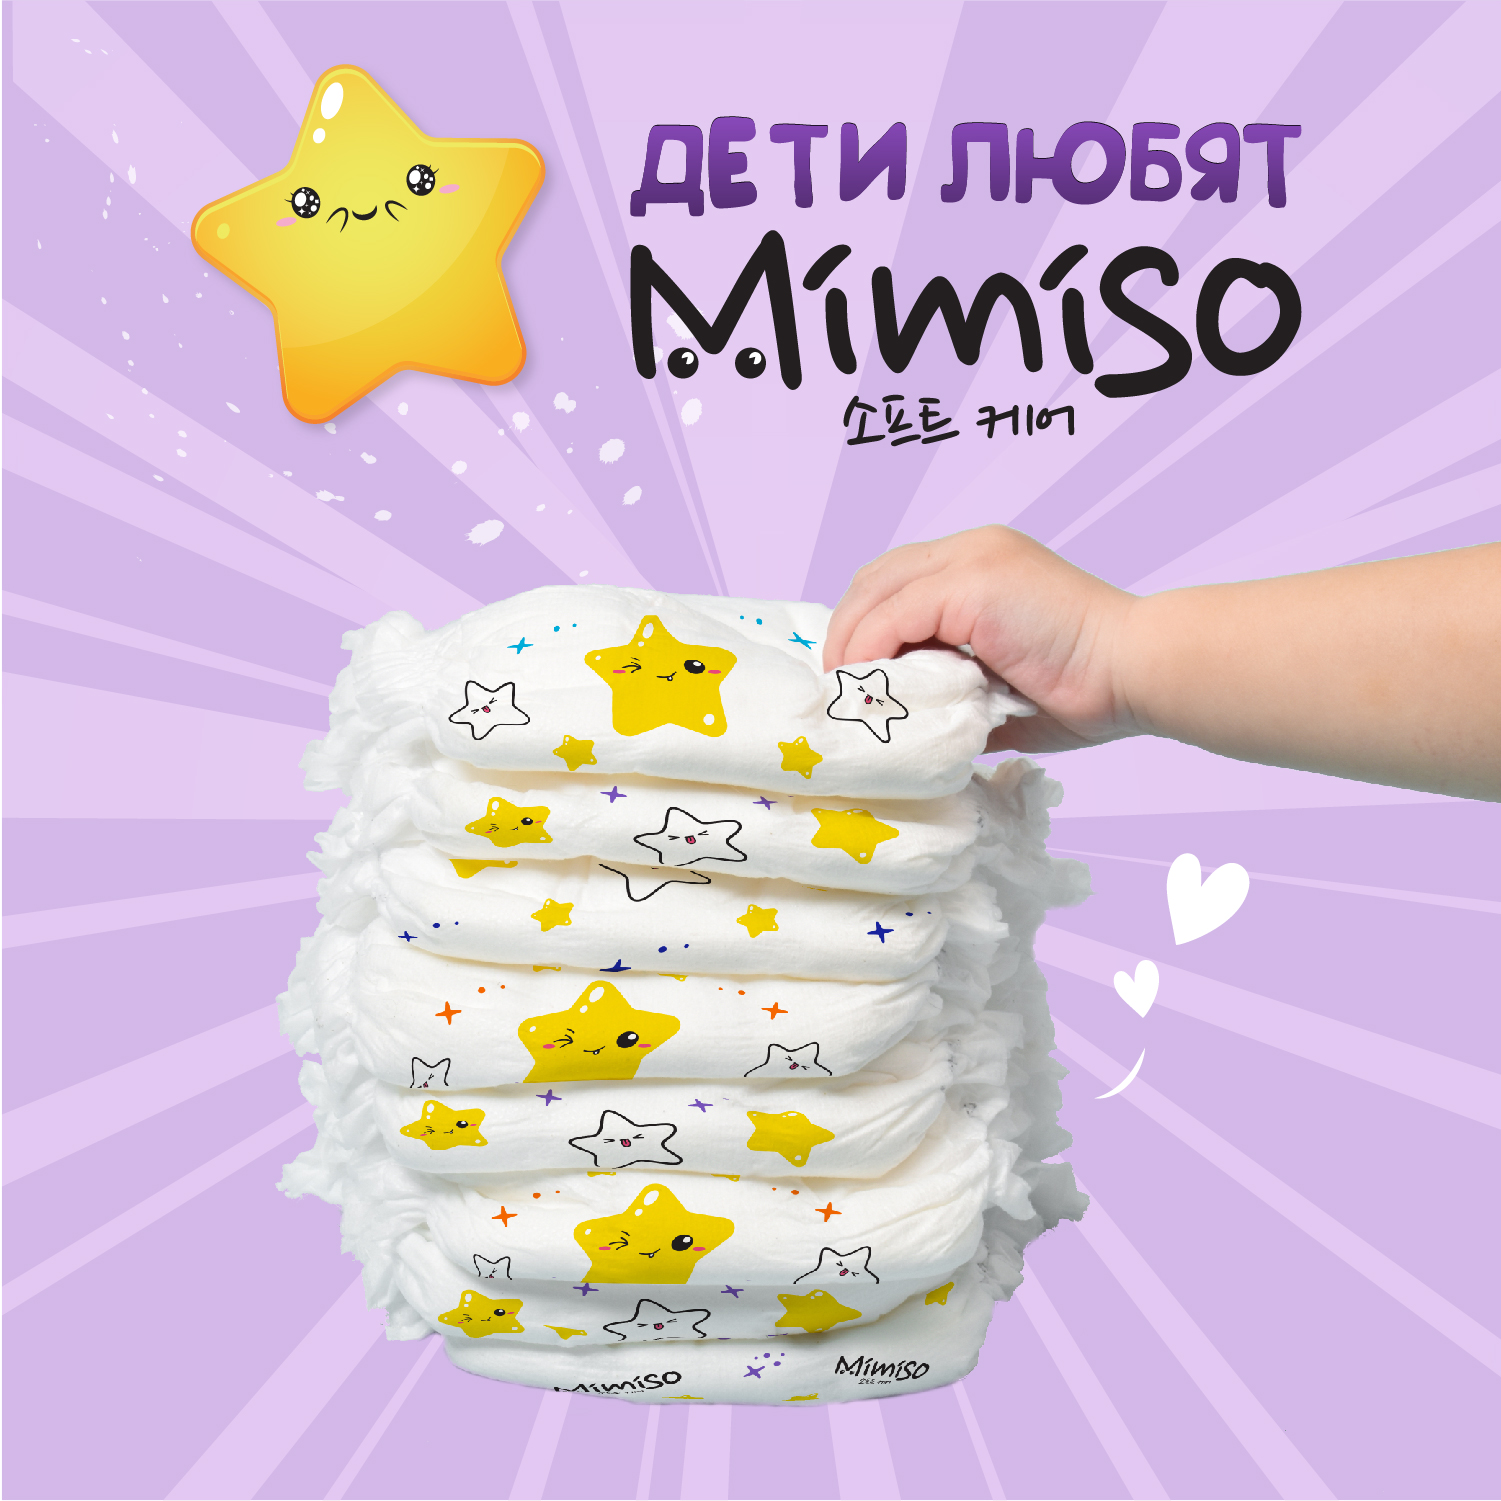 Трусики Mimiso одноразовые для детей 4/L 9-14 кг 42шт - фото 4